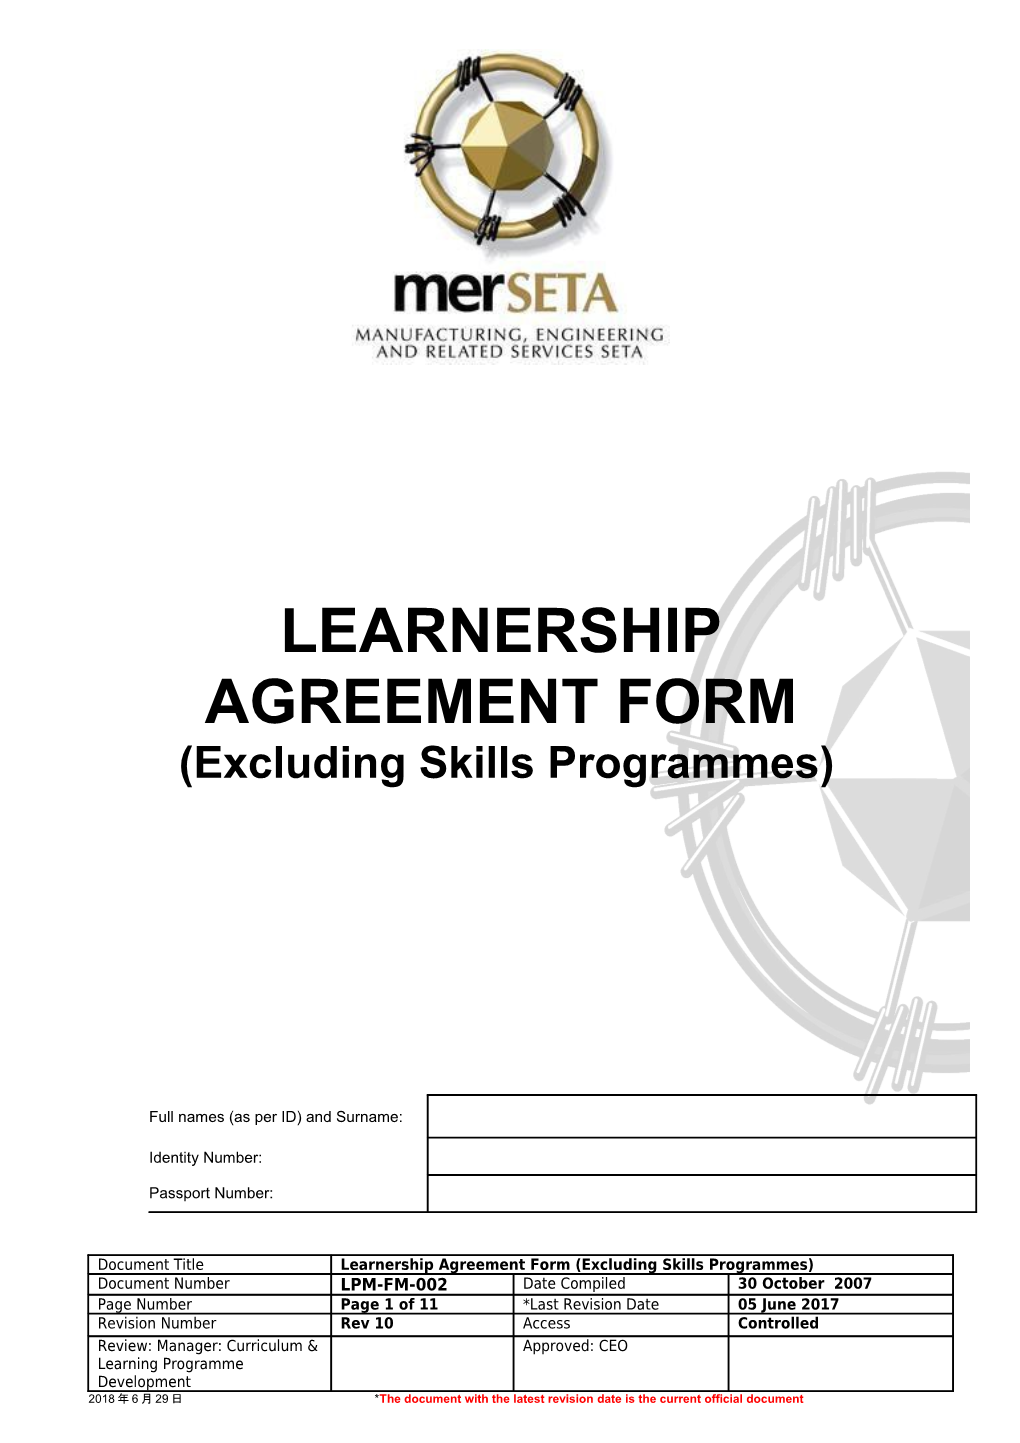 Learnership Agreement Form